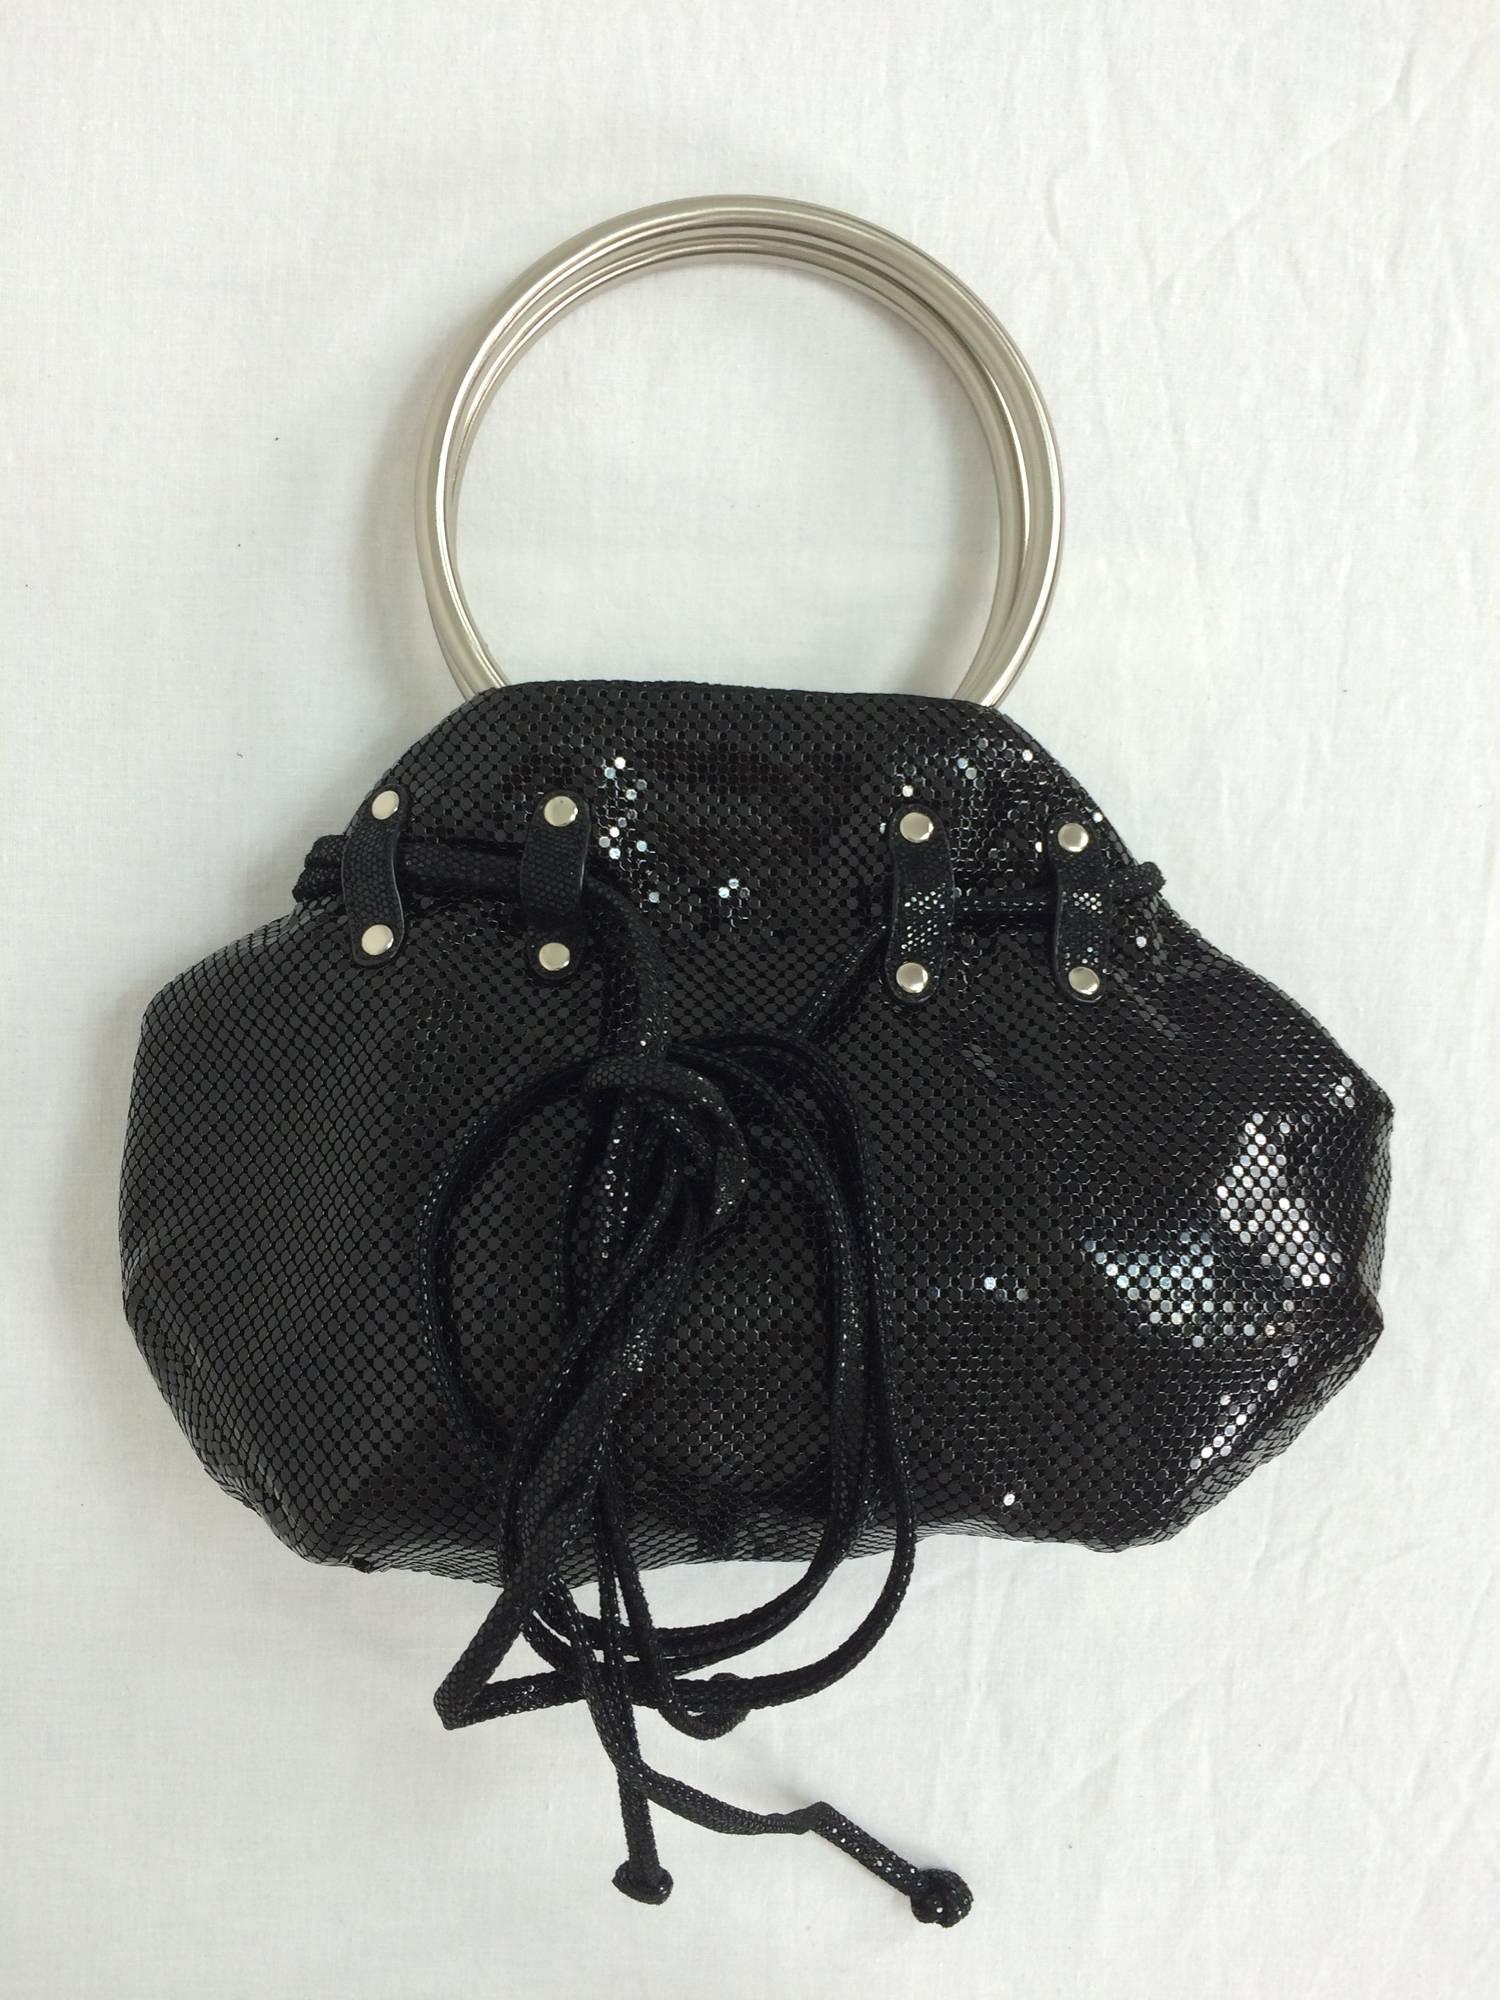 Black Whiting & Davis black metal mesh handbag with silver ring handles 